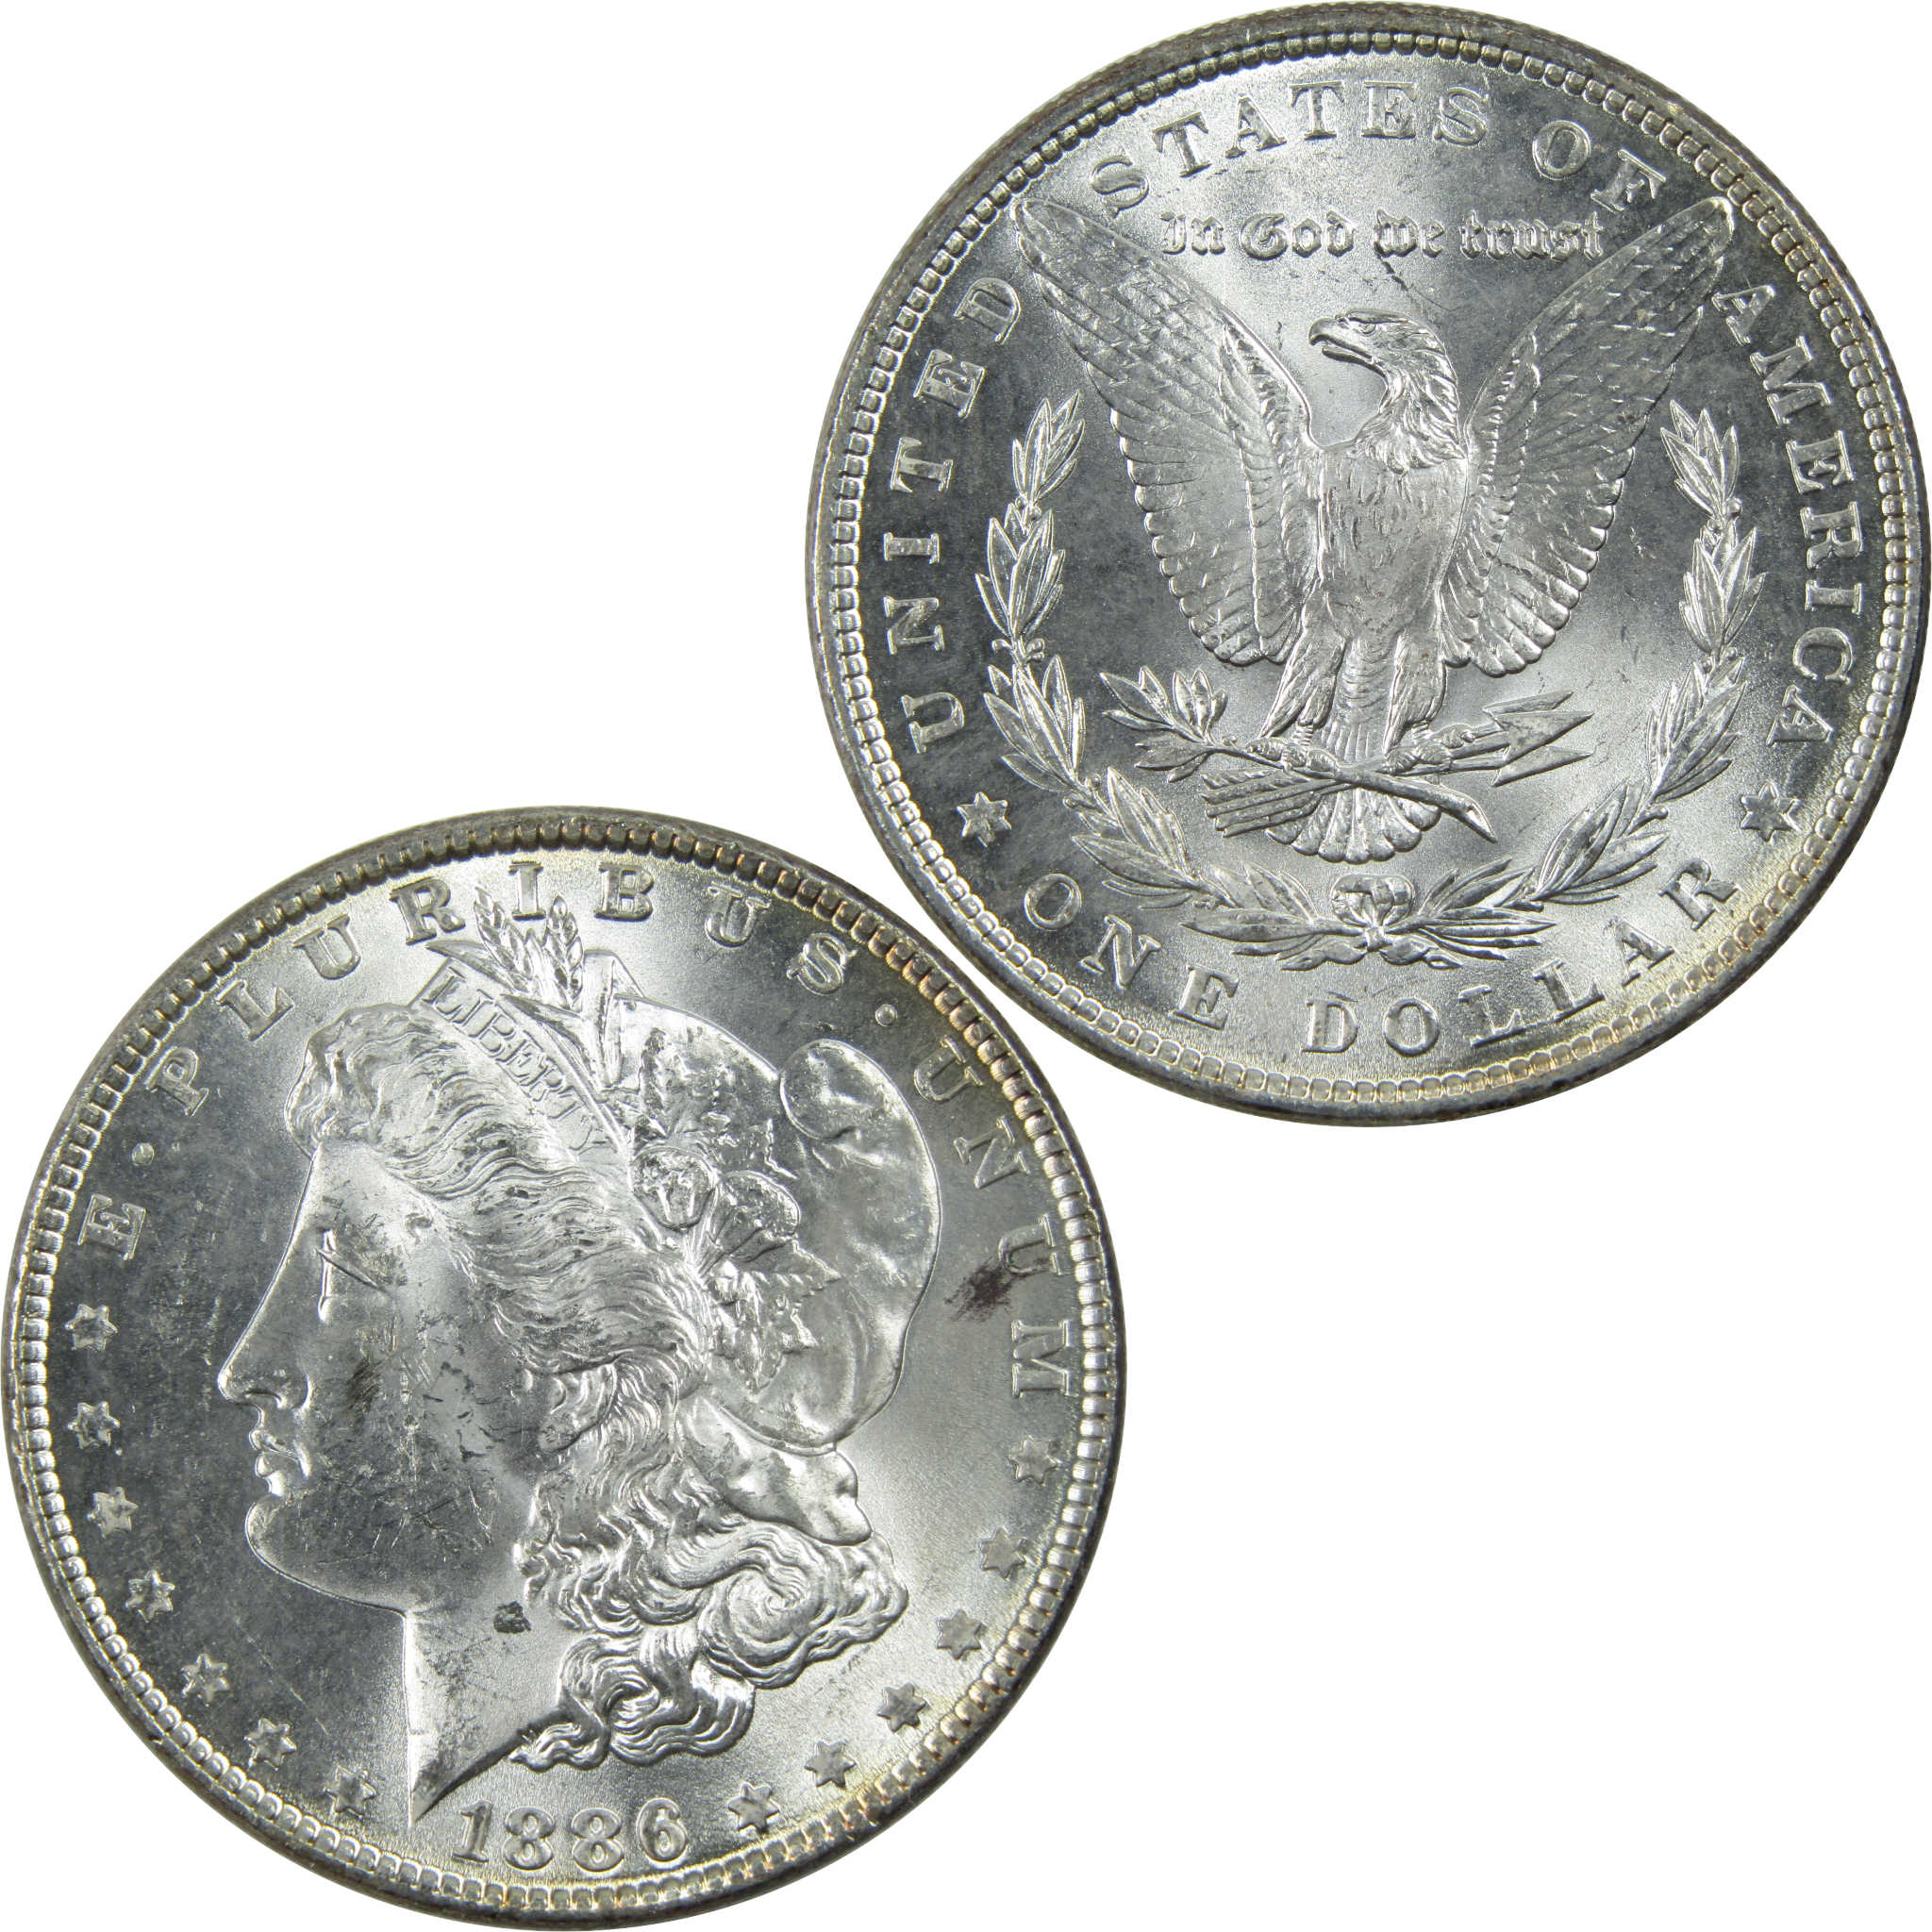 1886 Morgan Dollar Uncirculated Silver $1 Coin SKU:I13424 - Morgan coin - Morgan silver dollar - Morgan silver dollar for sale - Profile Coins &amp; Collectibles